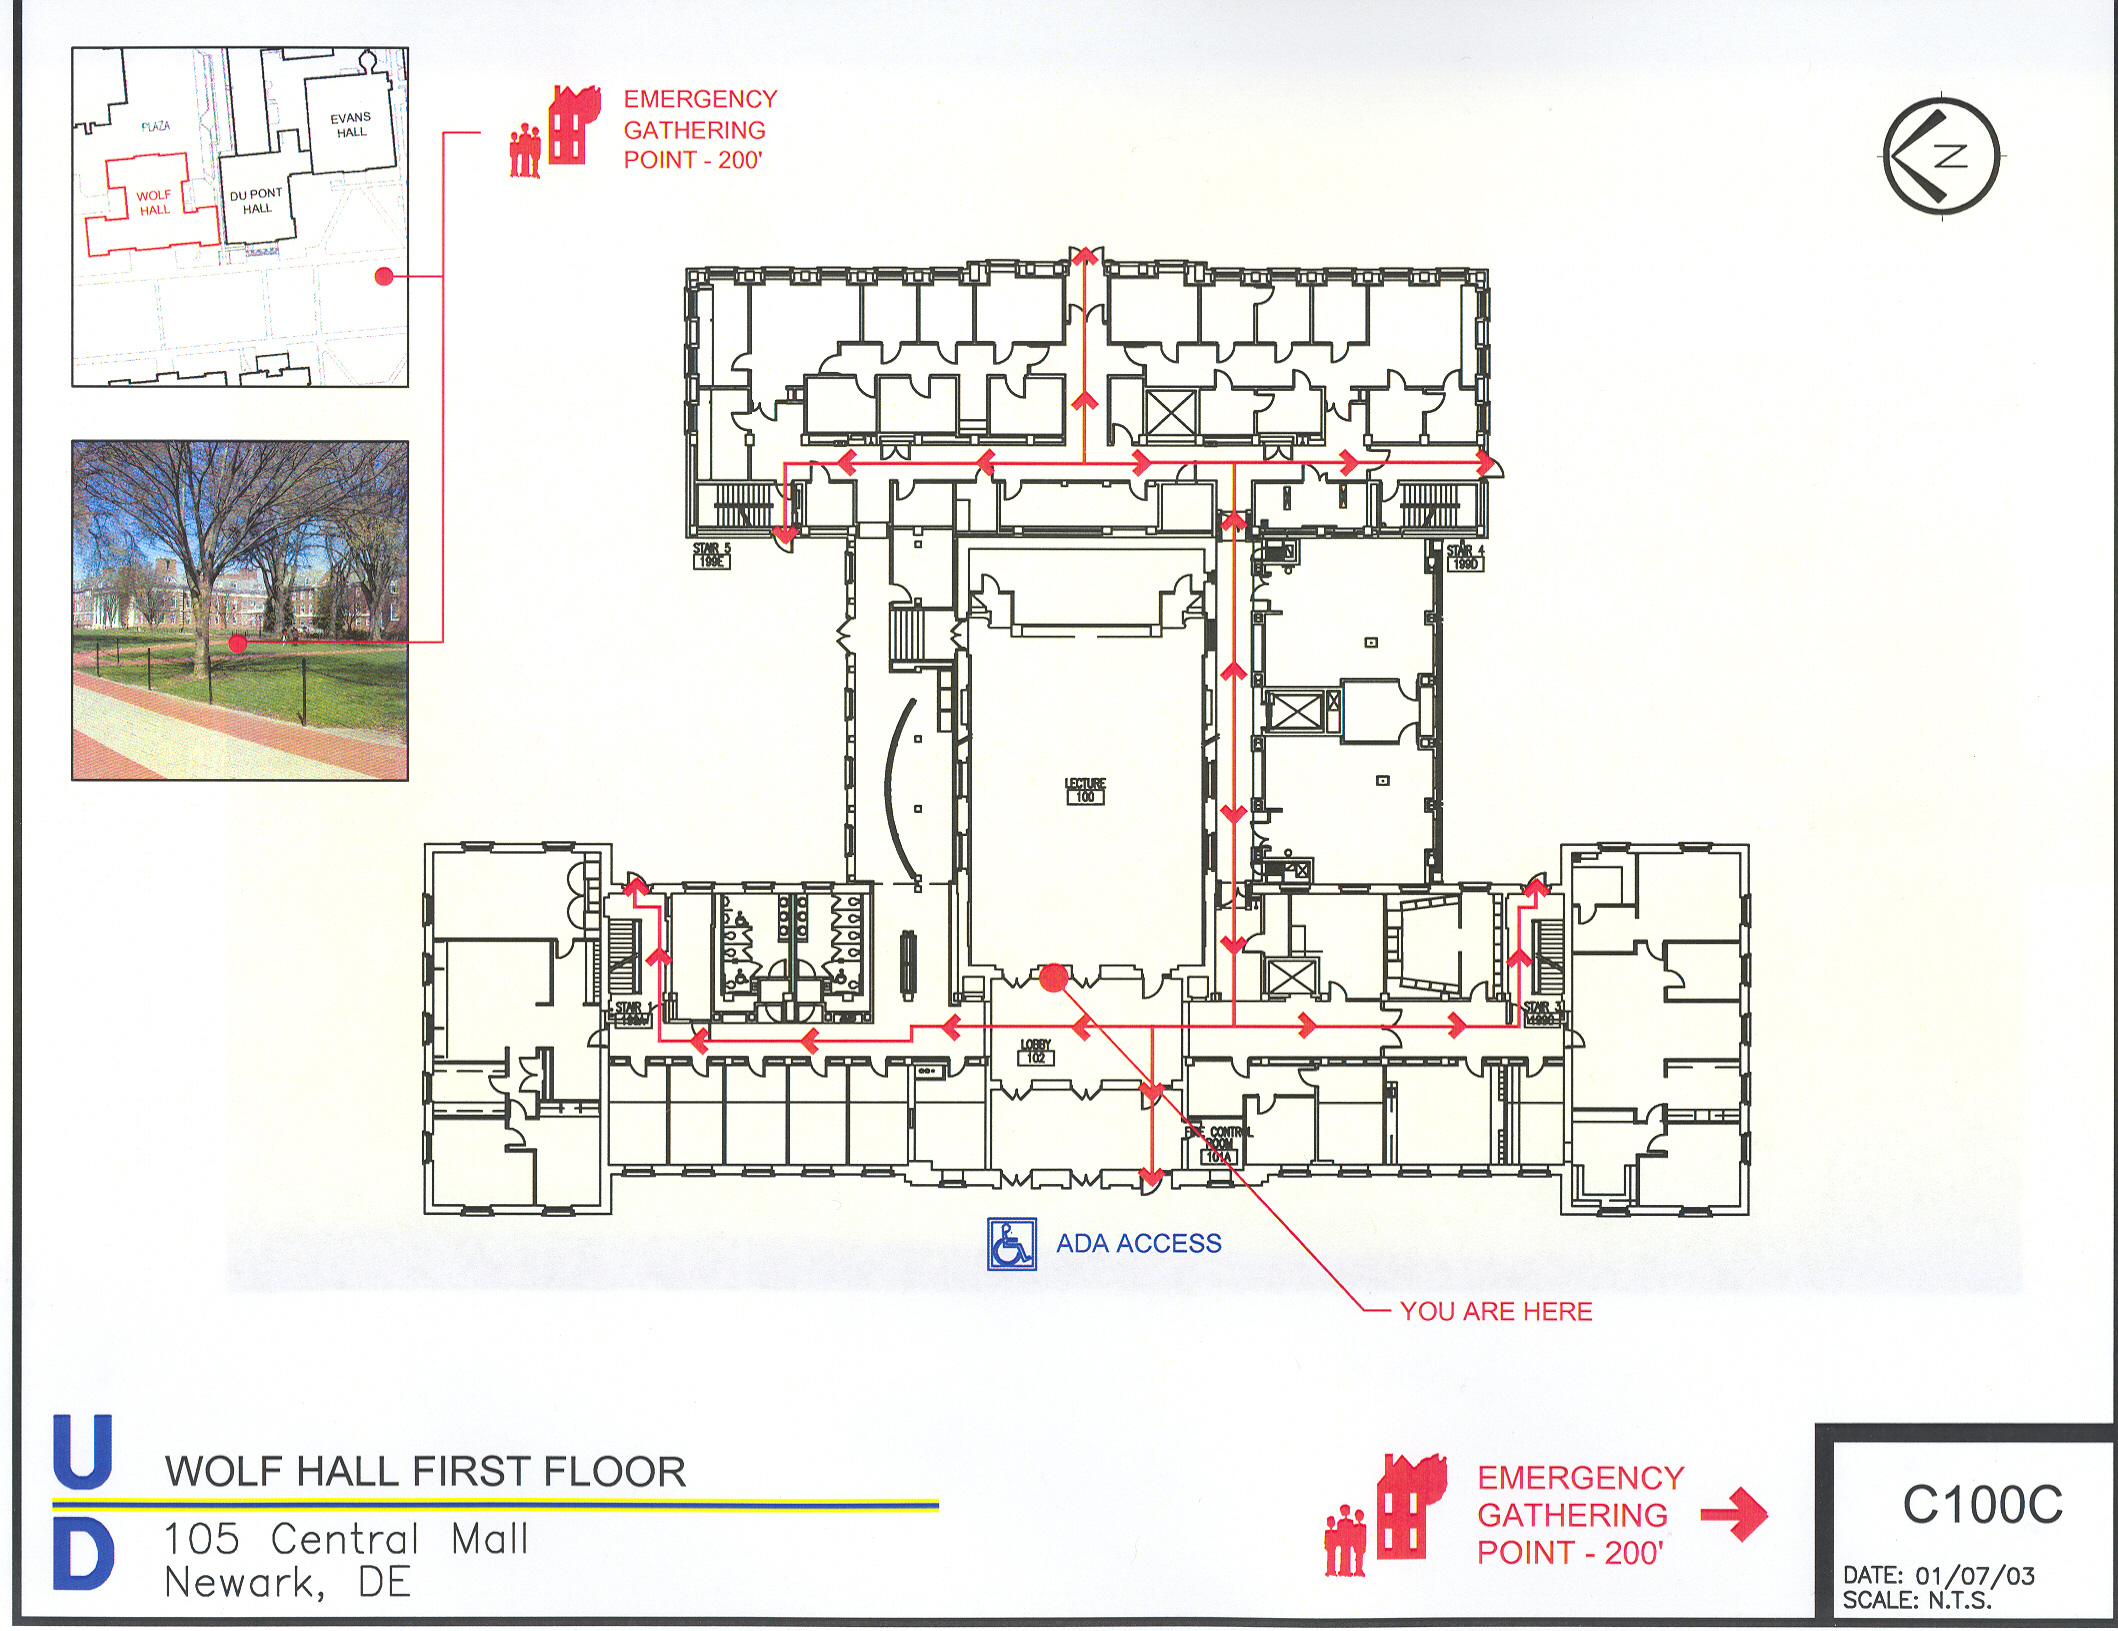 Sample Evacuation Plan of Wolf Hall